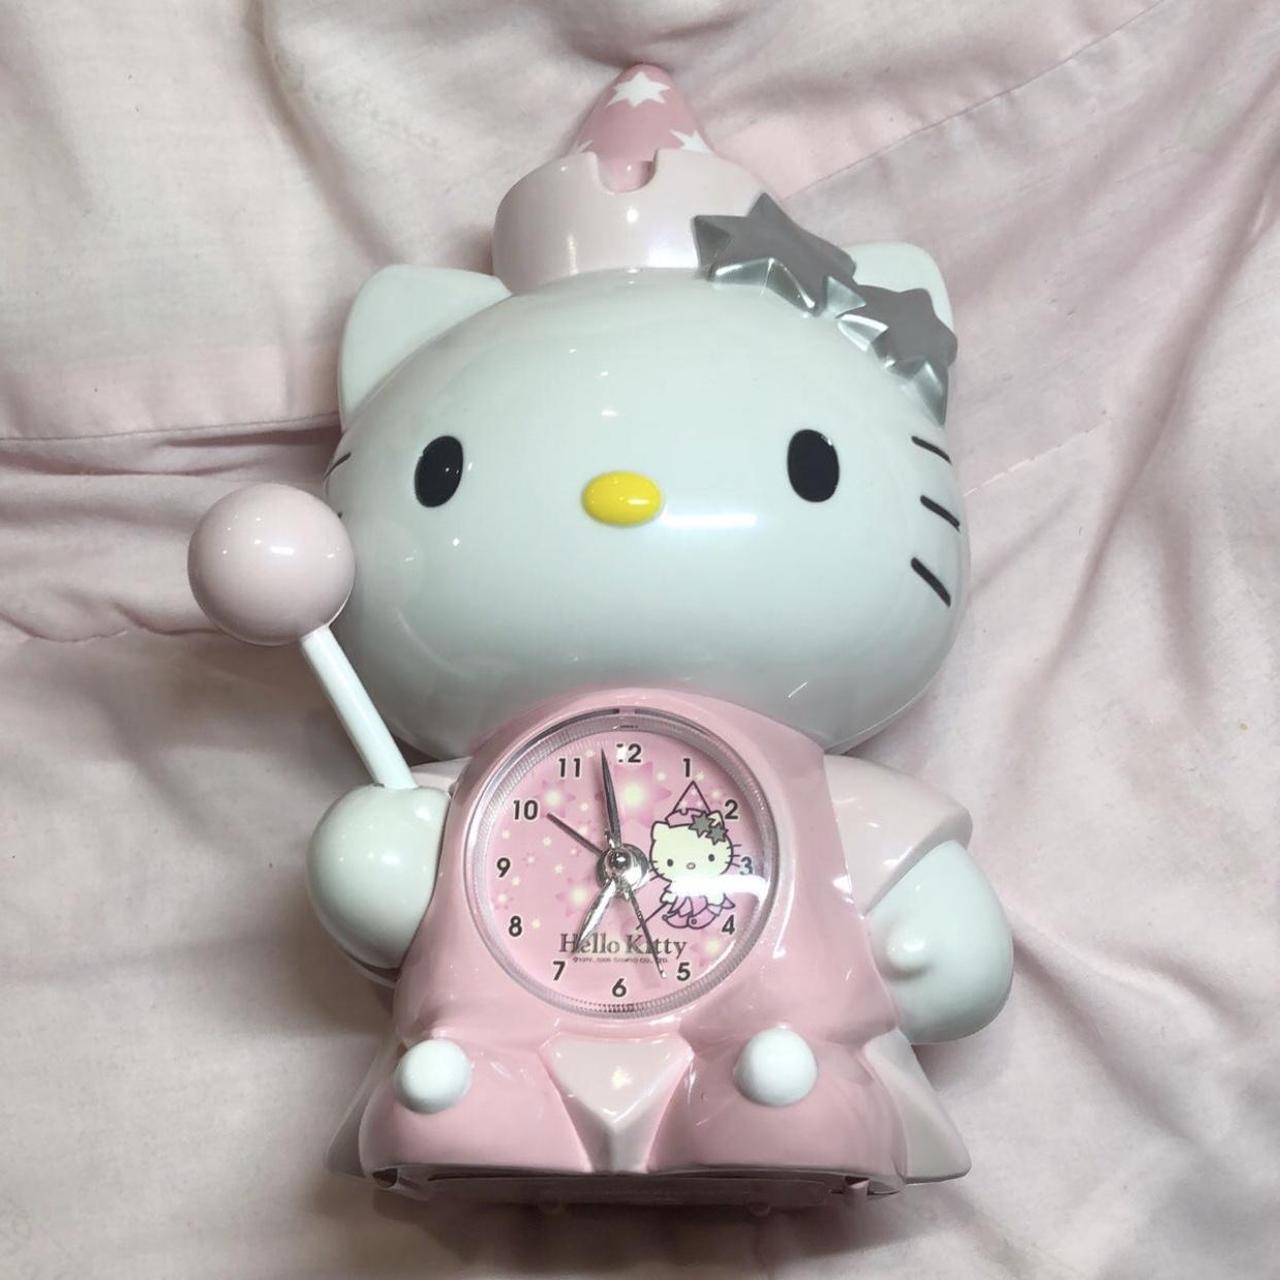 SOLD - Hello Kitty Tea Cup Alarm Clock Radio and Night Light 